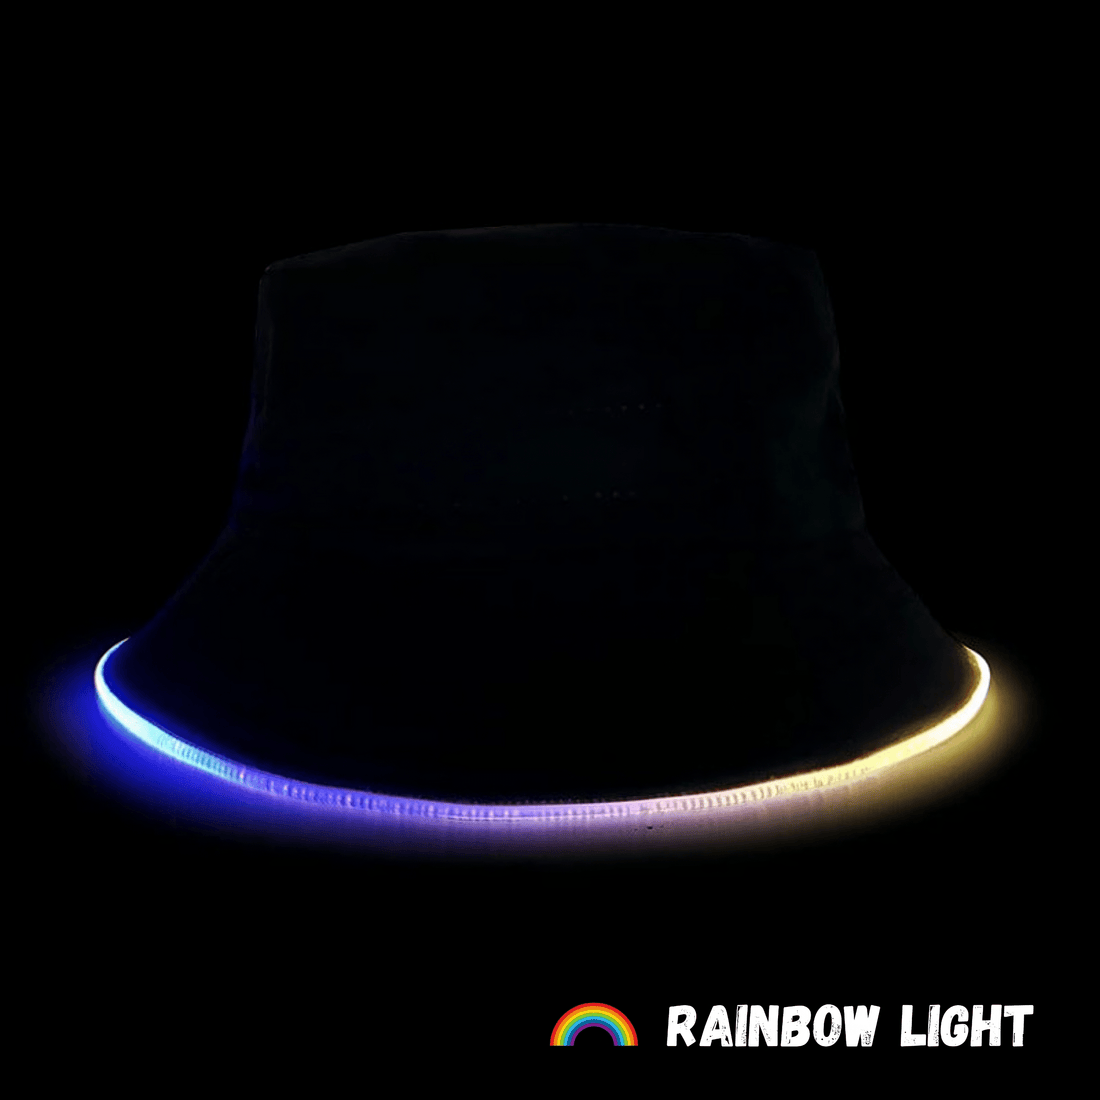 Rave Essentials Co. Black Hat + Multi-Color LED Unisex Color Changing Luminus™ LED Bucket Hat